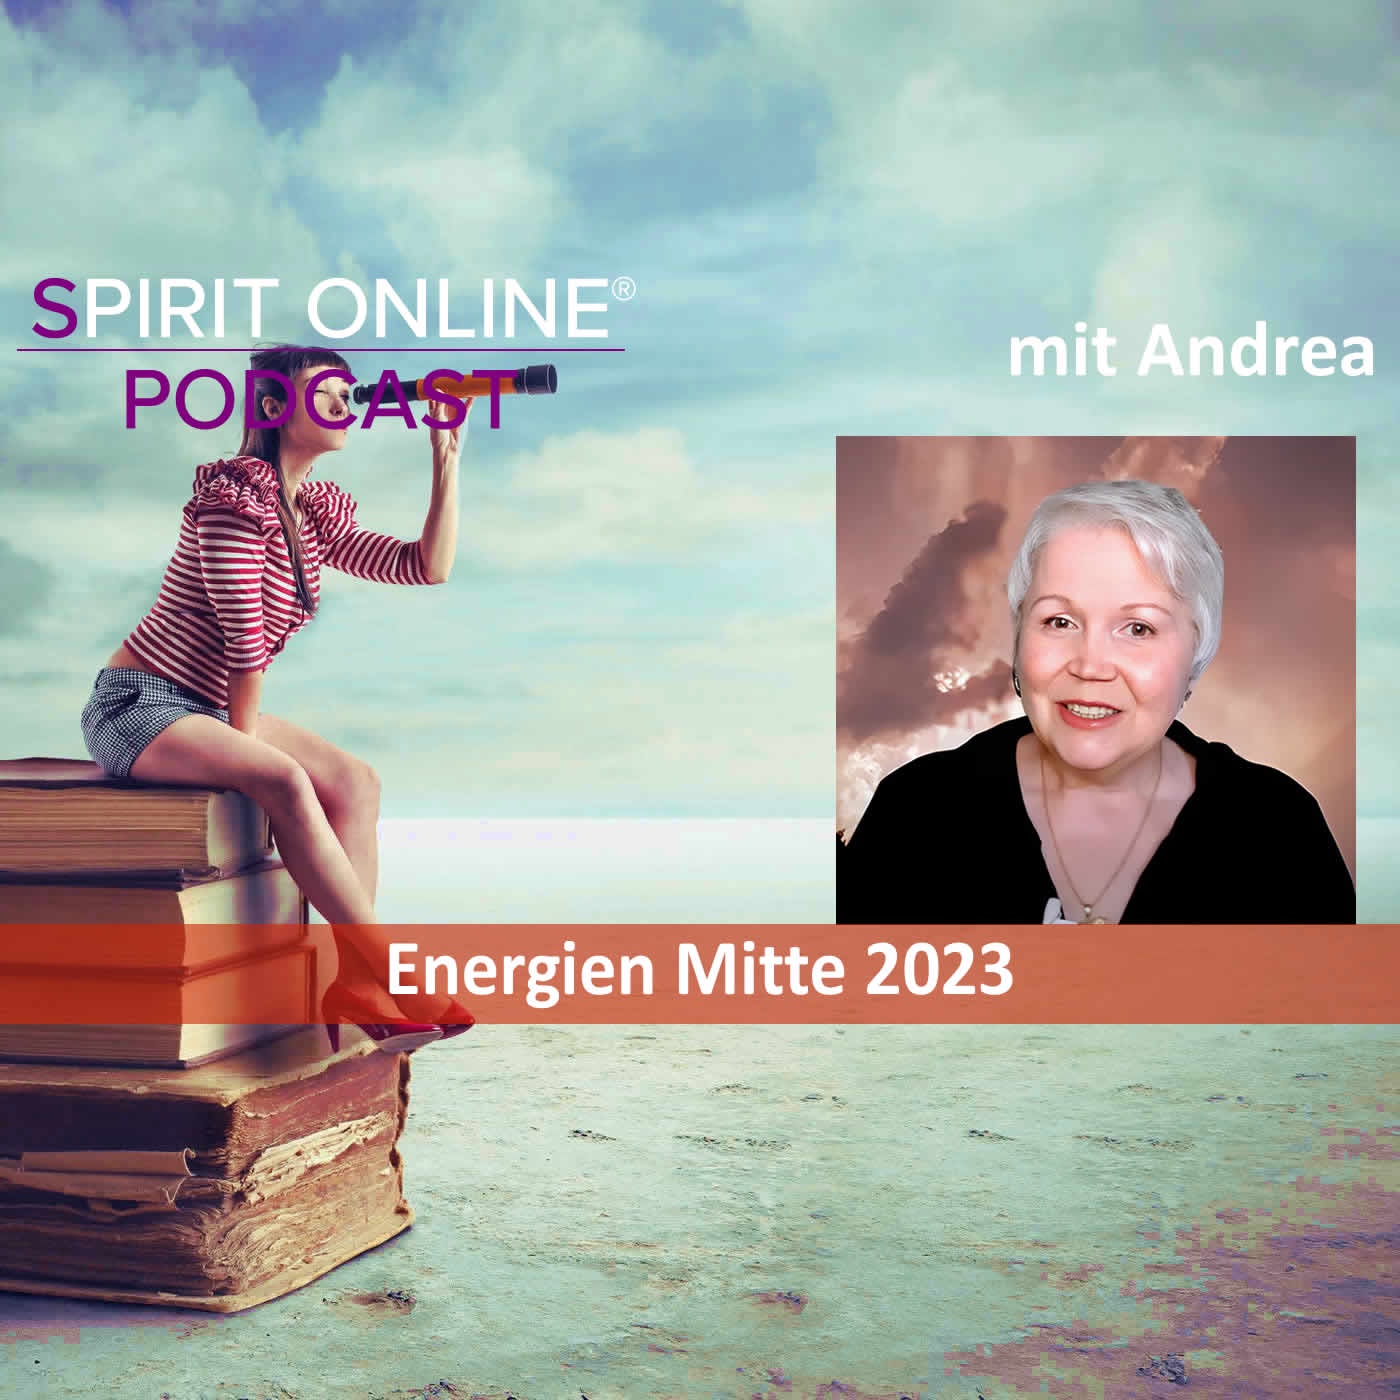 Energien Mitte 2023 mit Andrea